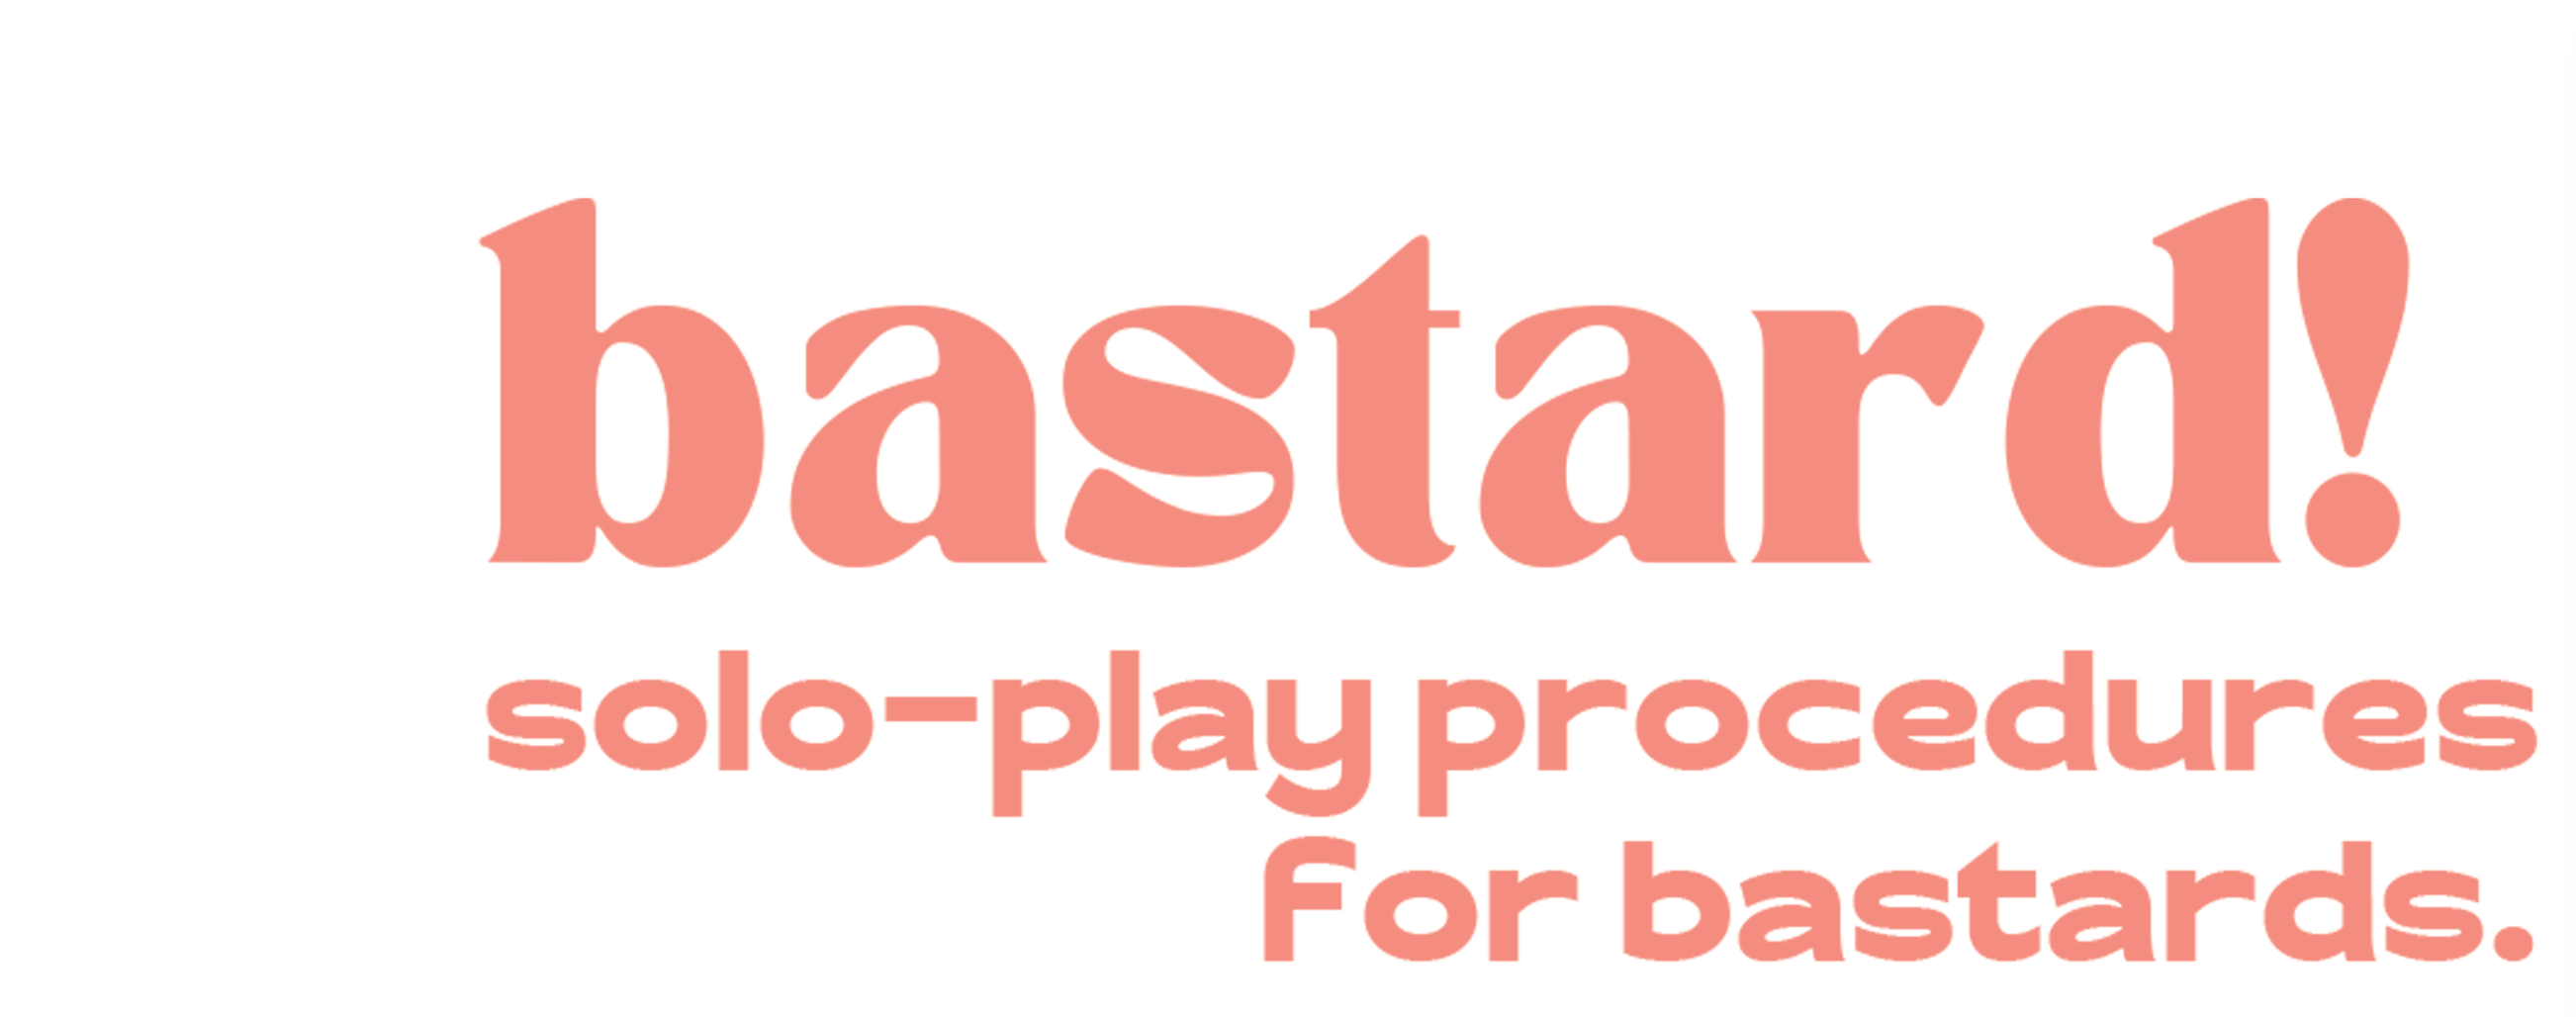 bastard! solo-play procedures for bastards.